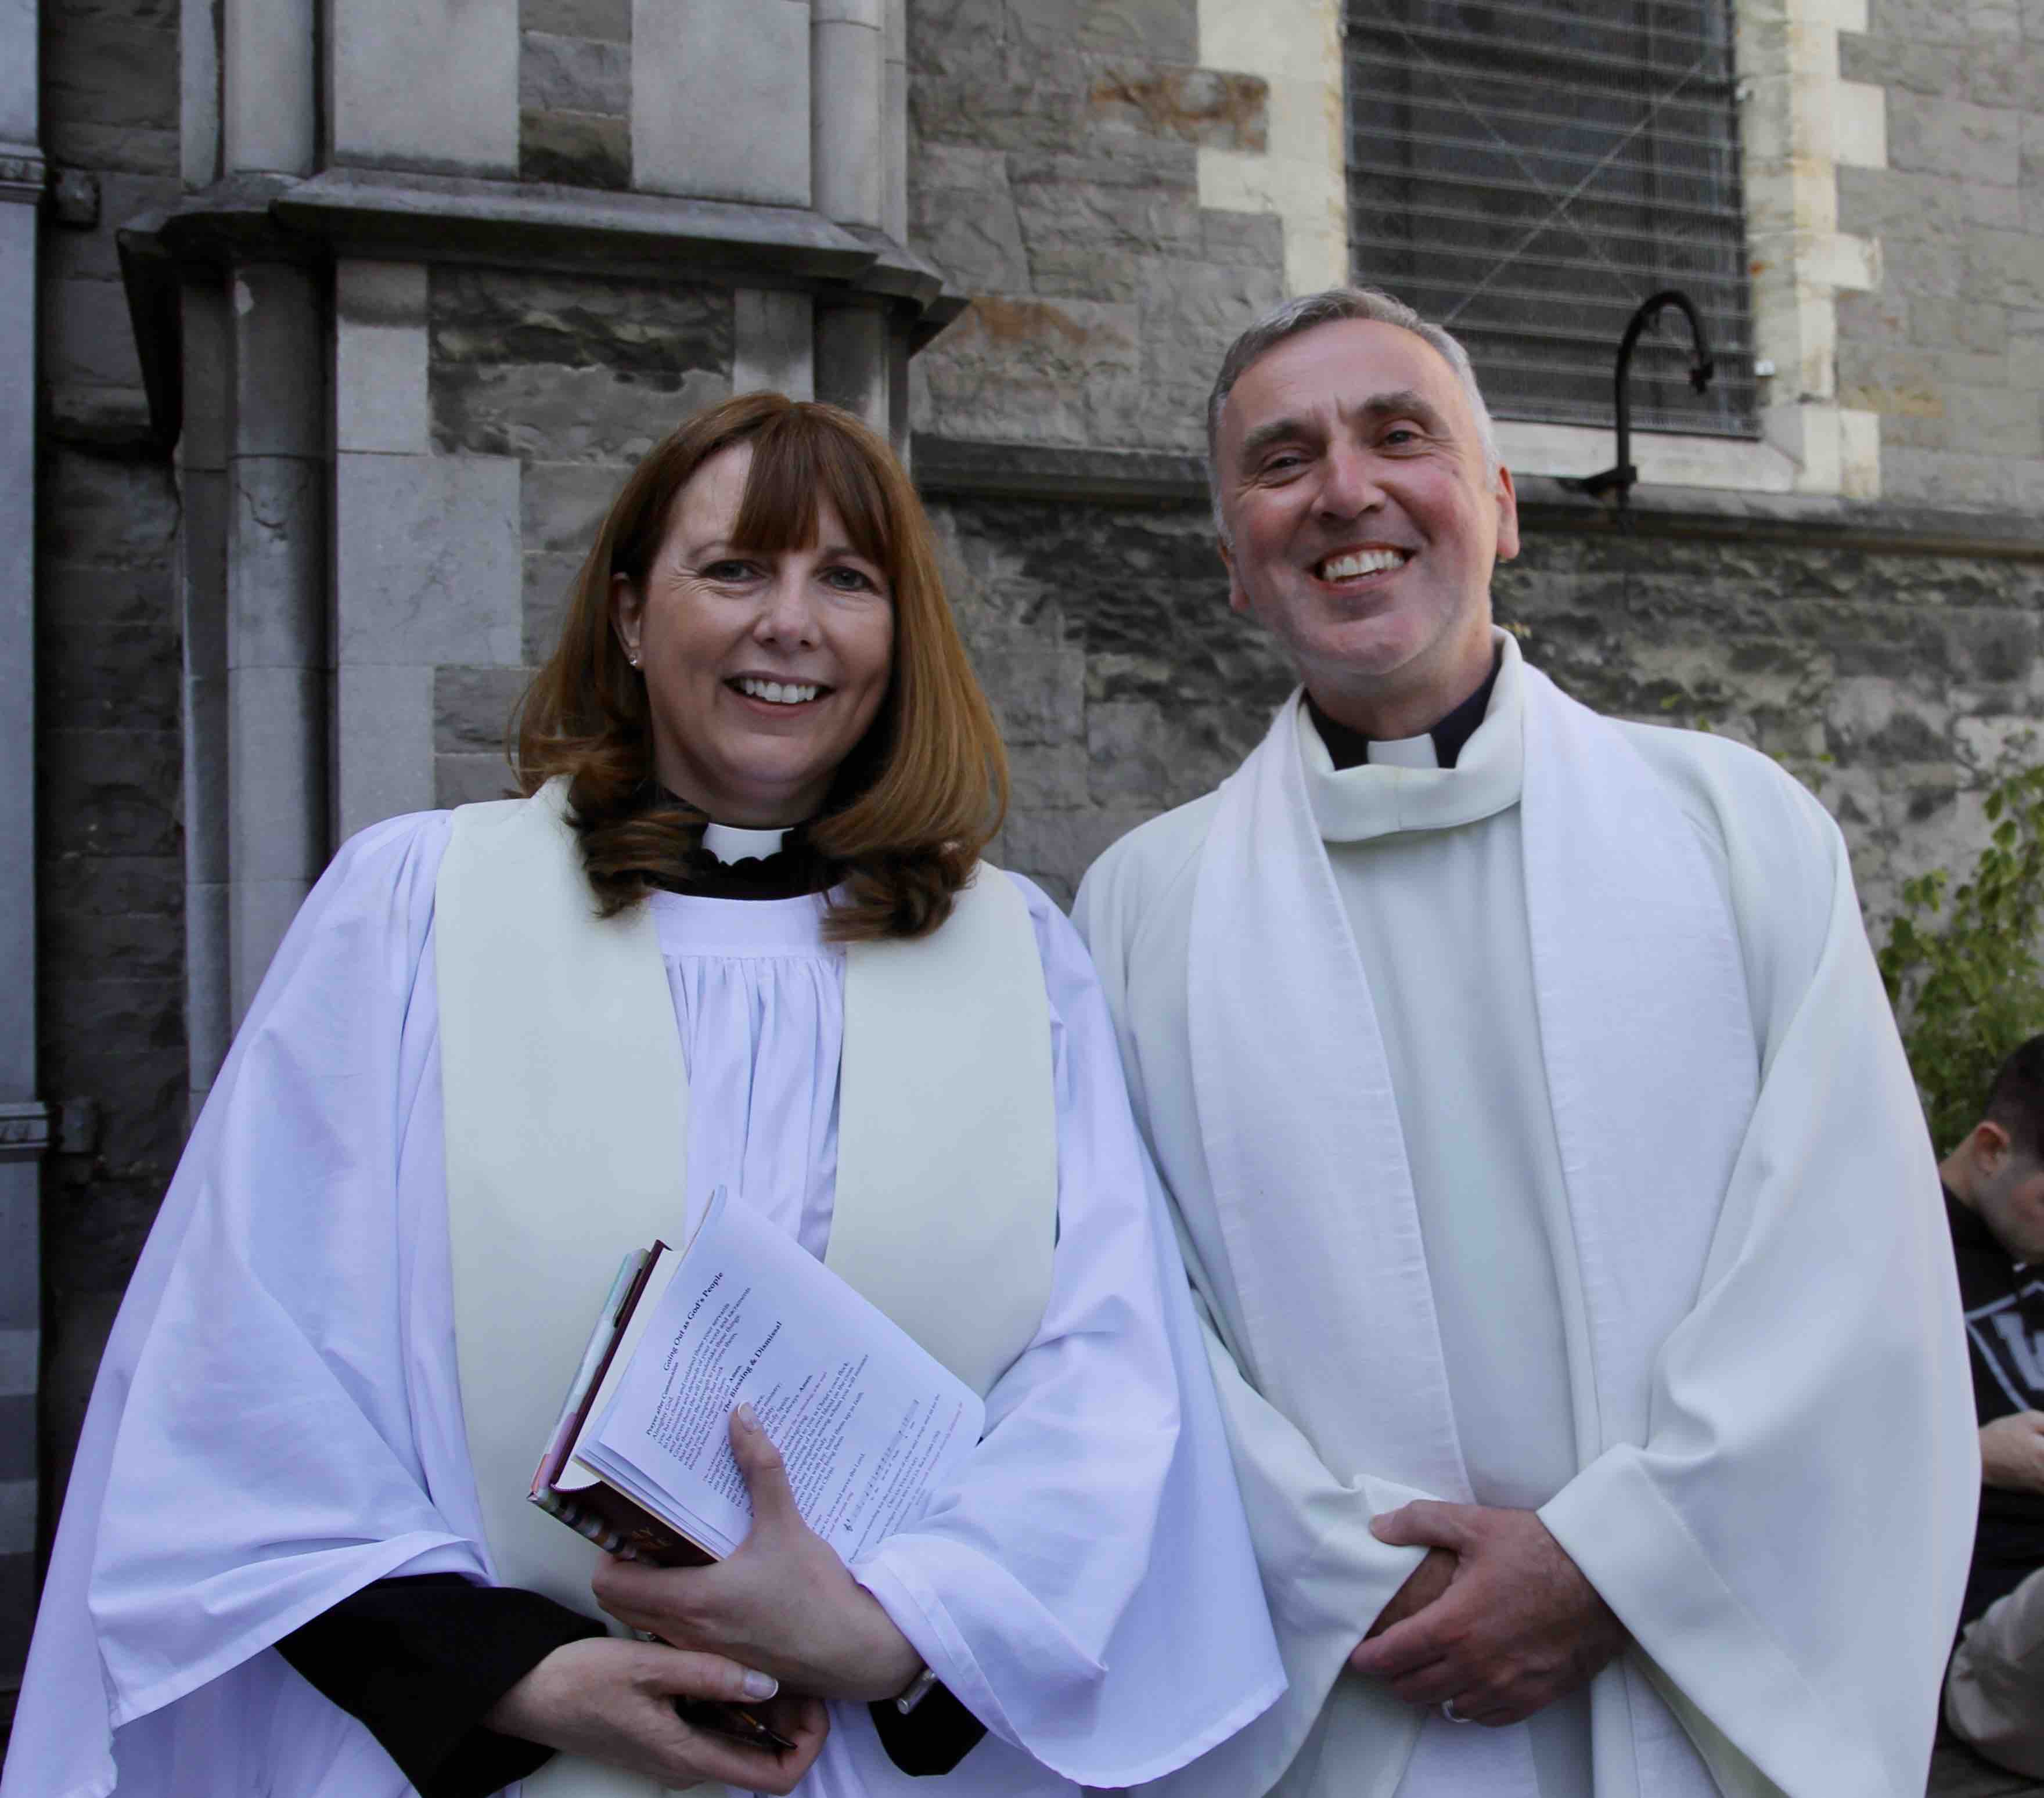 The Revd Caroline Brennan with the Revd Rob Clements, Rector of Kilternan.